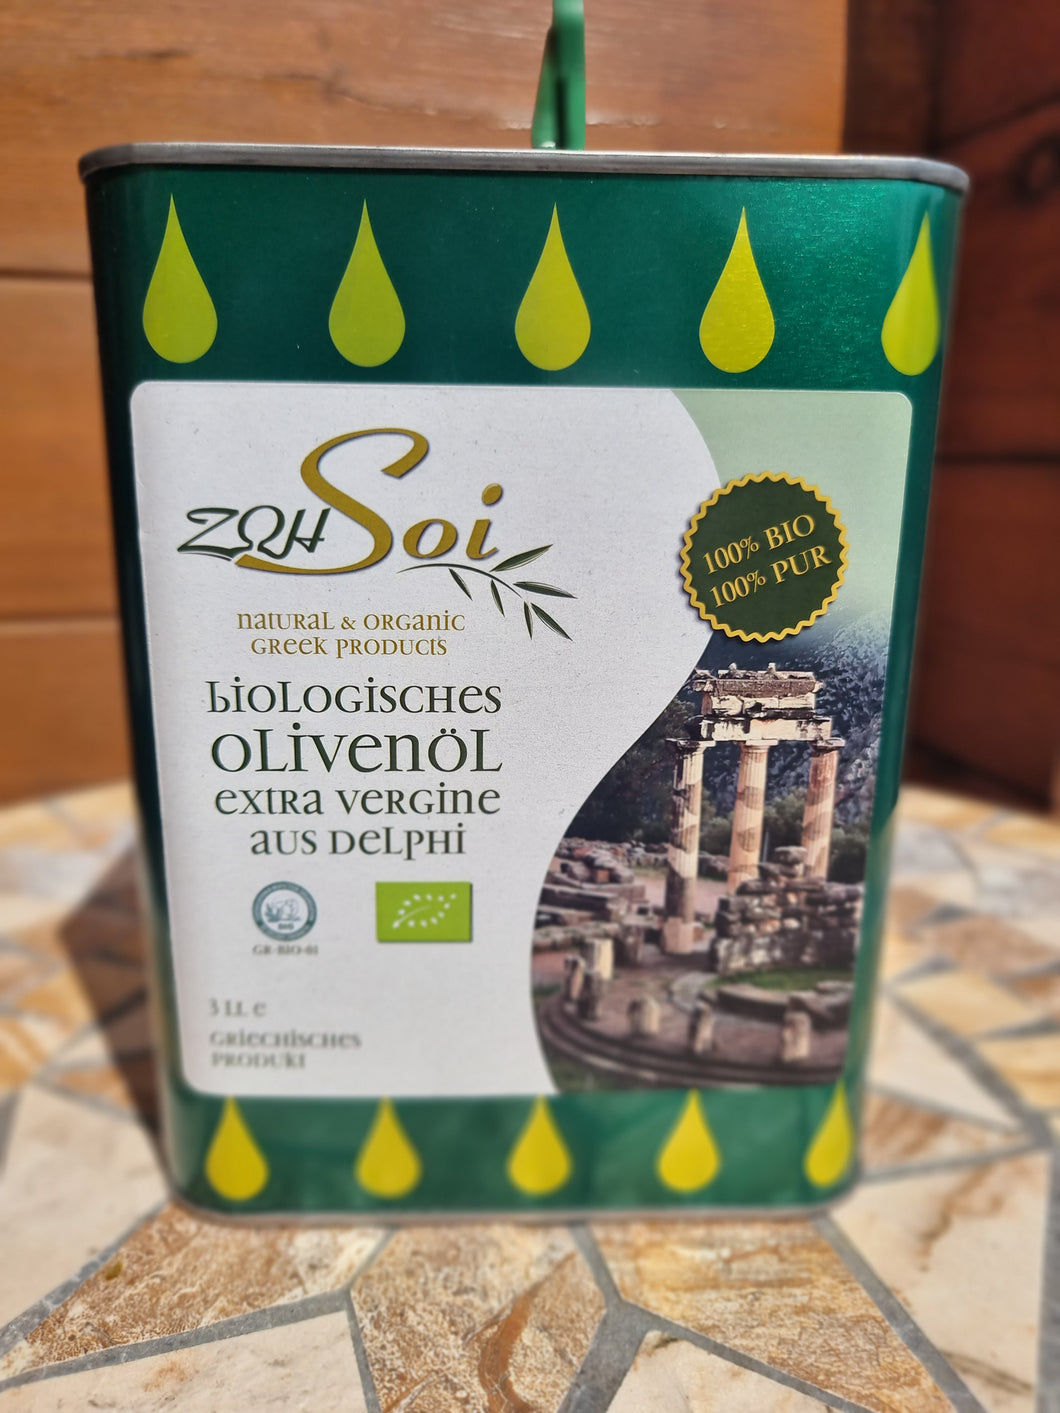 Soi biologisches Olivenöl aus Delphi extra virgin - 3l Kanister